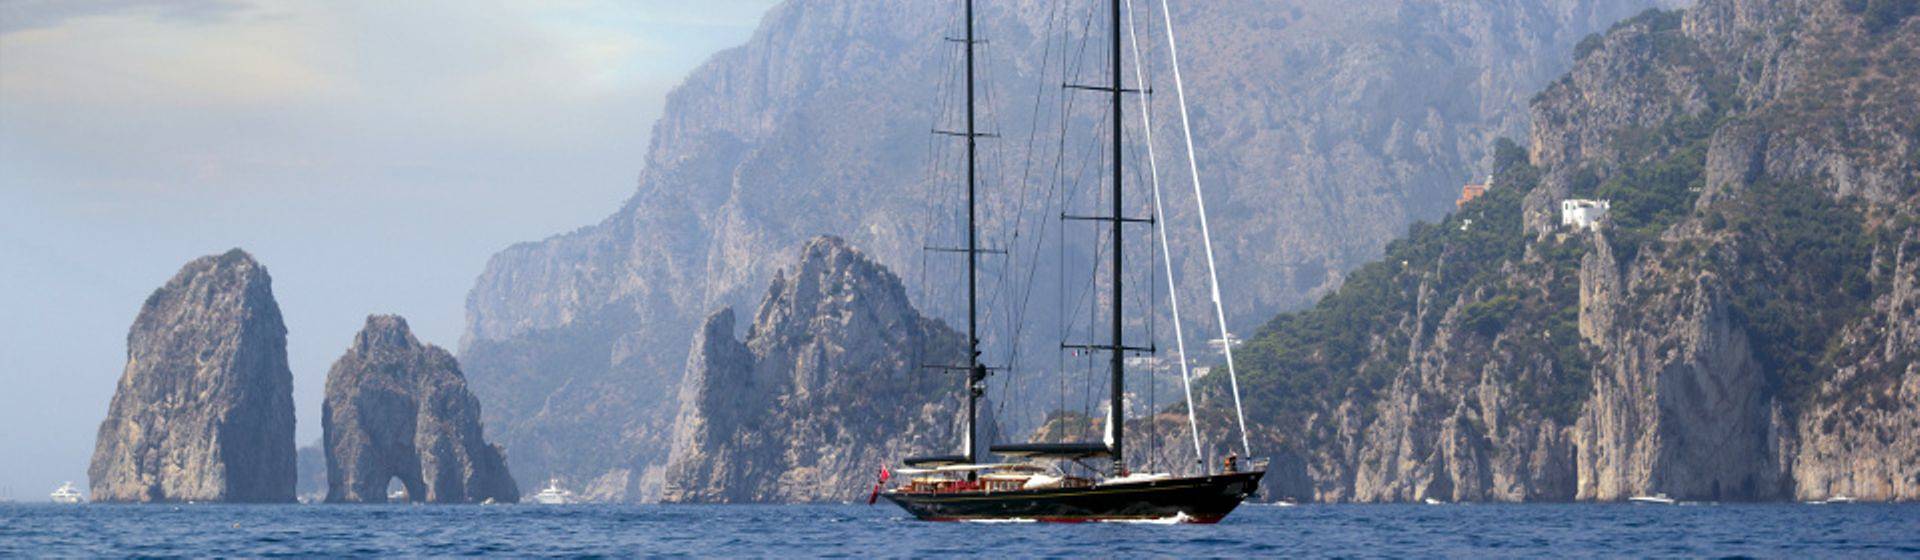 Holidays to Capri Image